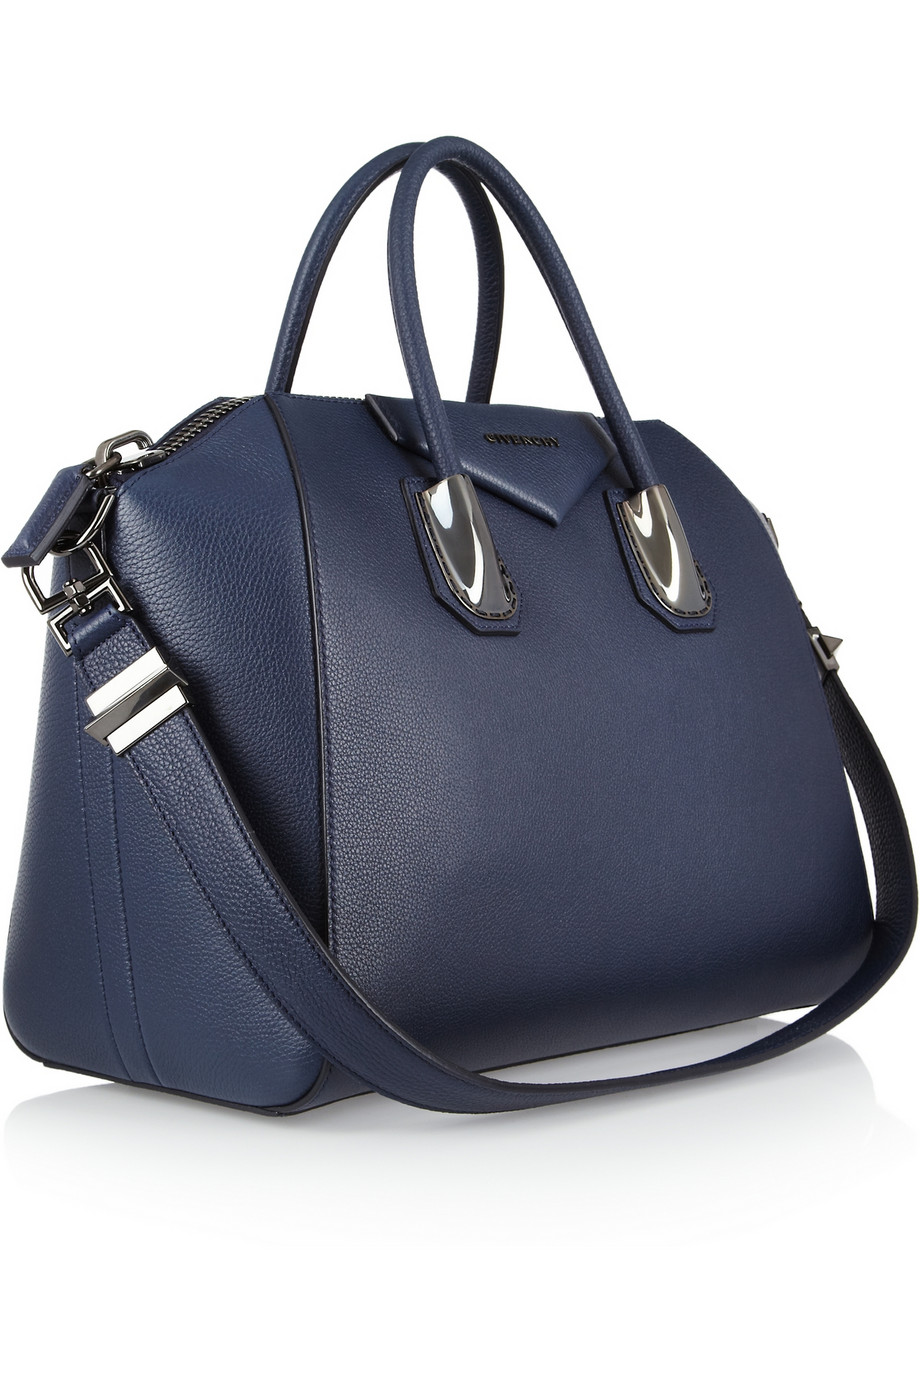 Lyst - Givenchy Medium Antigona Bag in Navy Leather in Blue